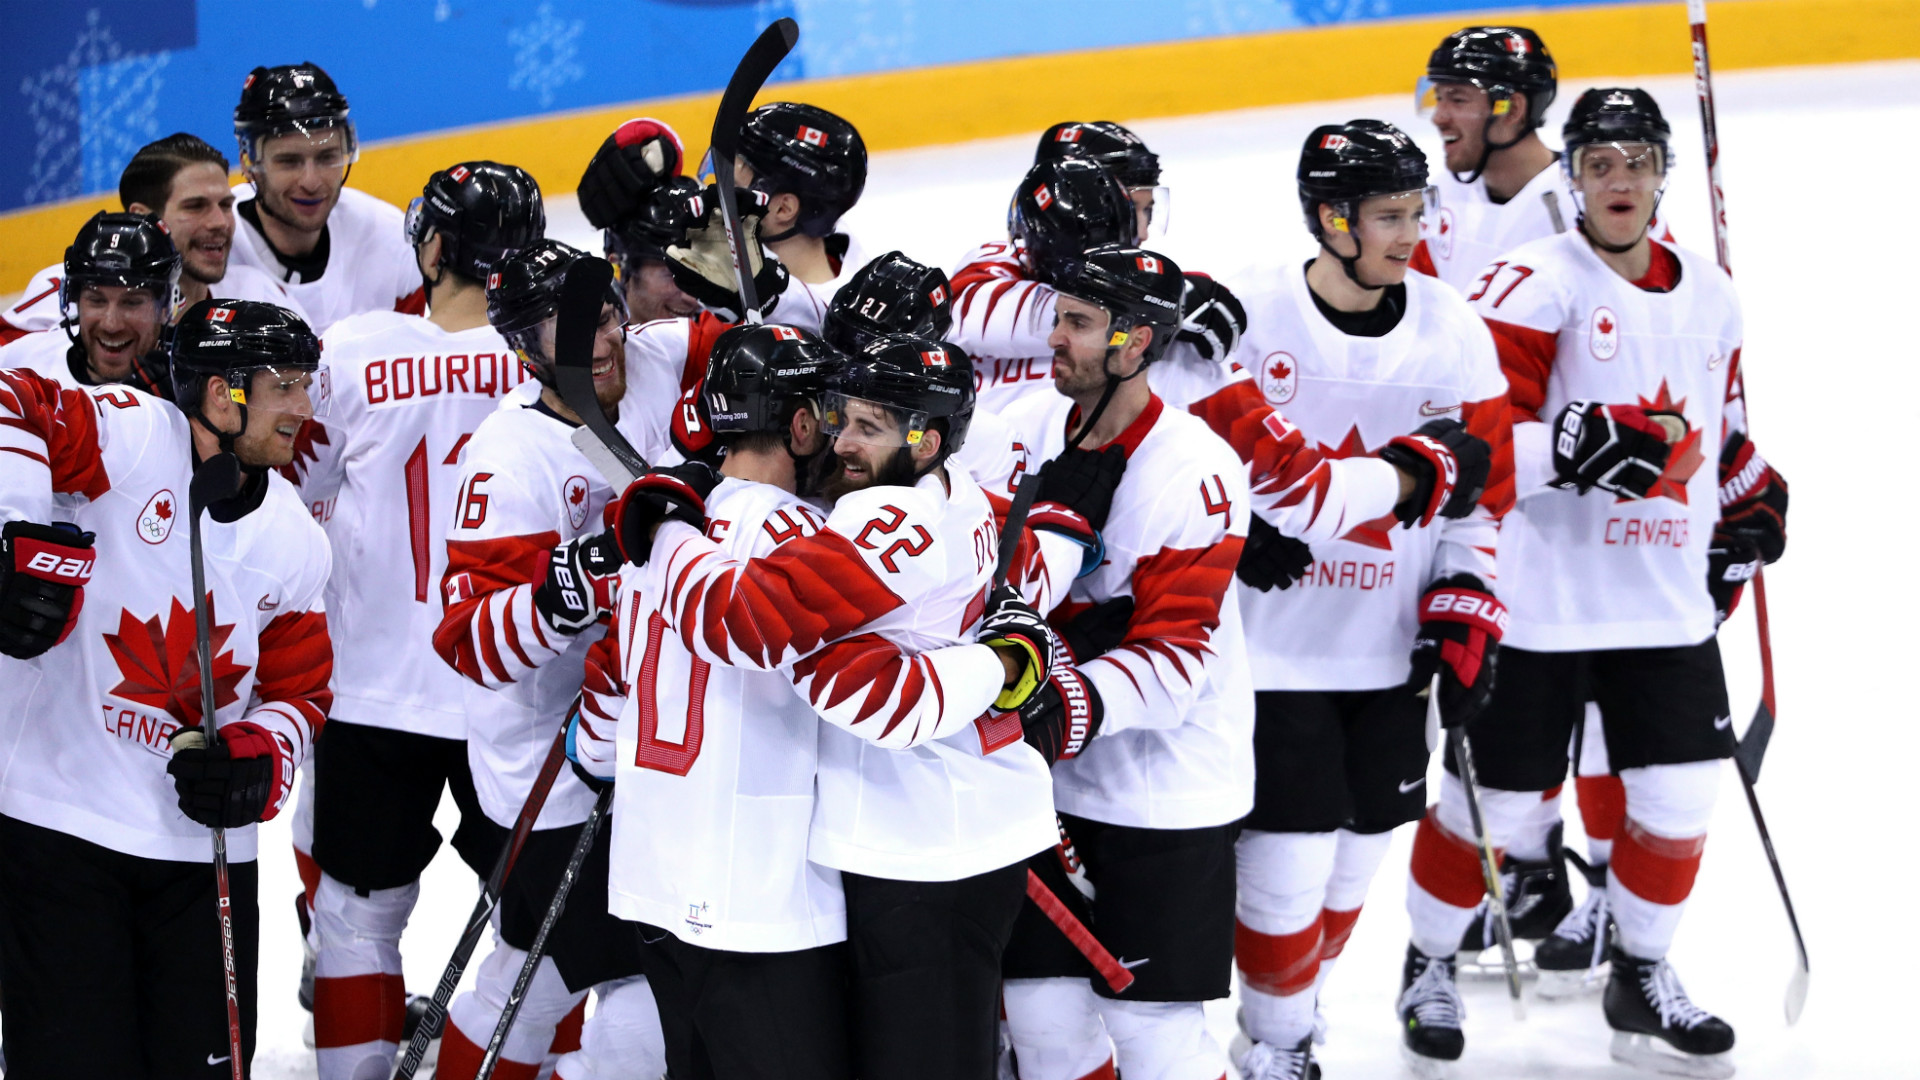 Winter Olympics 2018 Canada wins bronze in men's hockey after 10goal